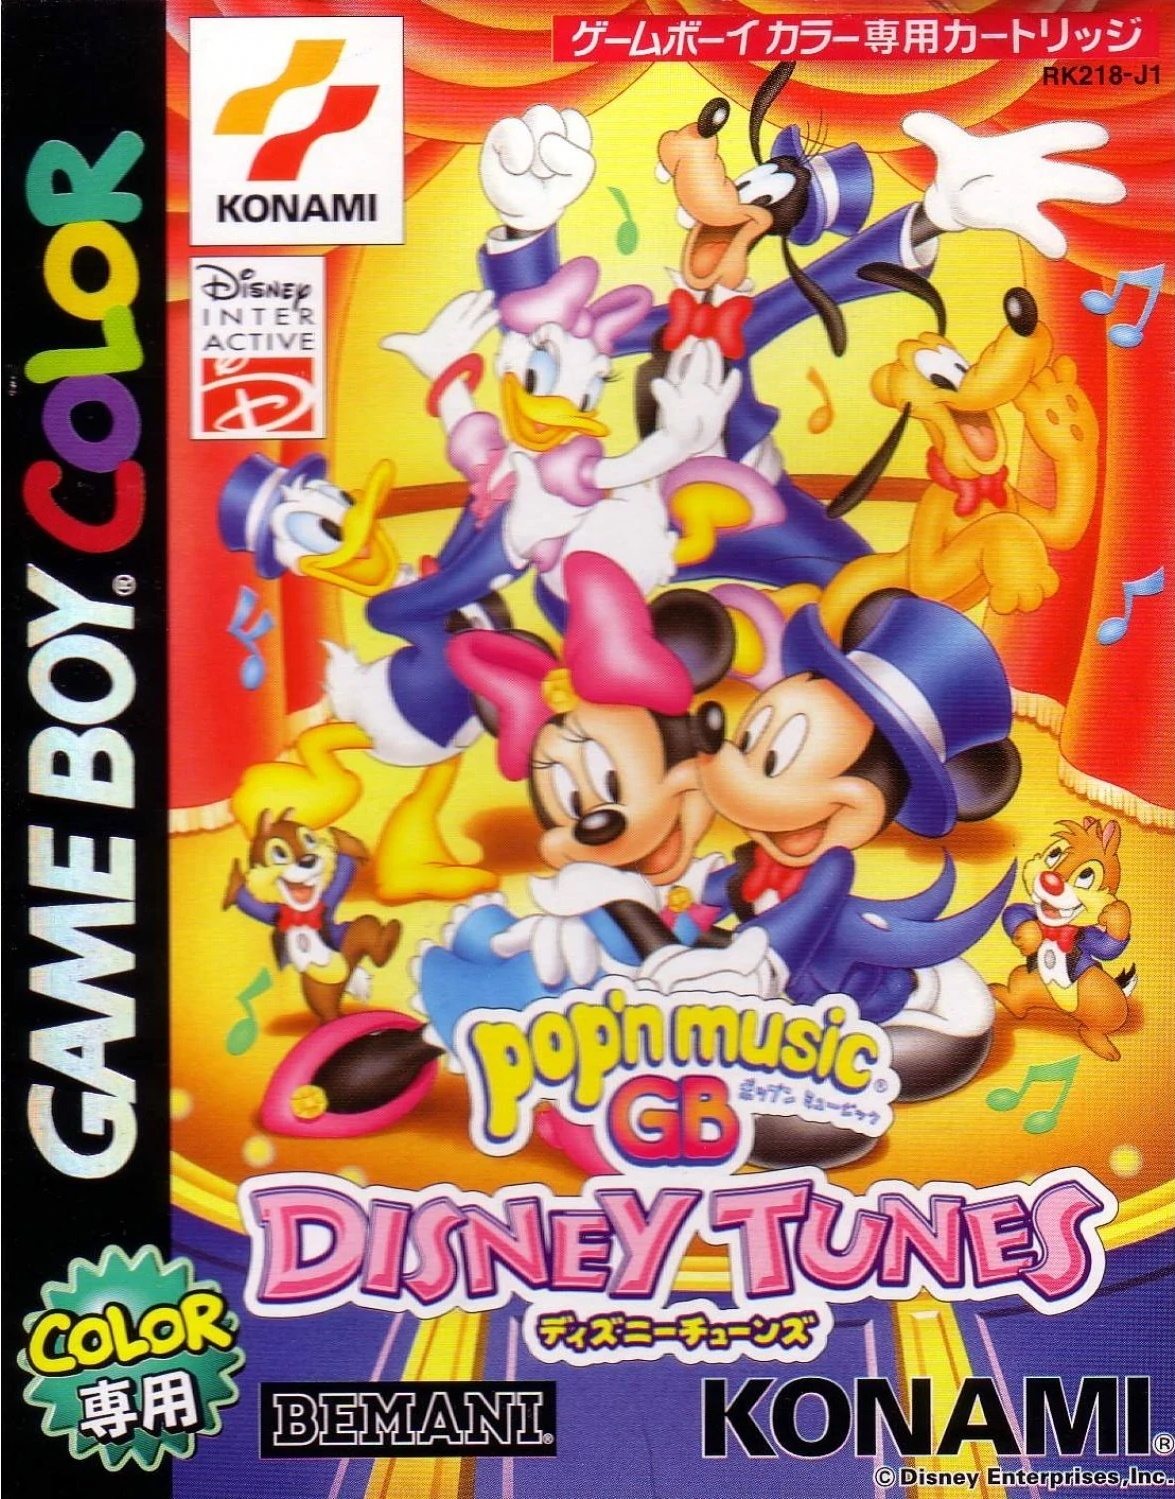 TGDB - Browse - Game - Pop'n Music GB: Disney Tunes